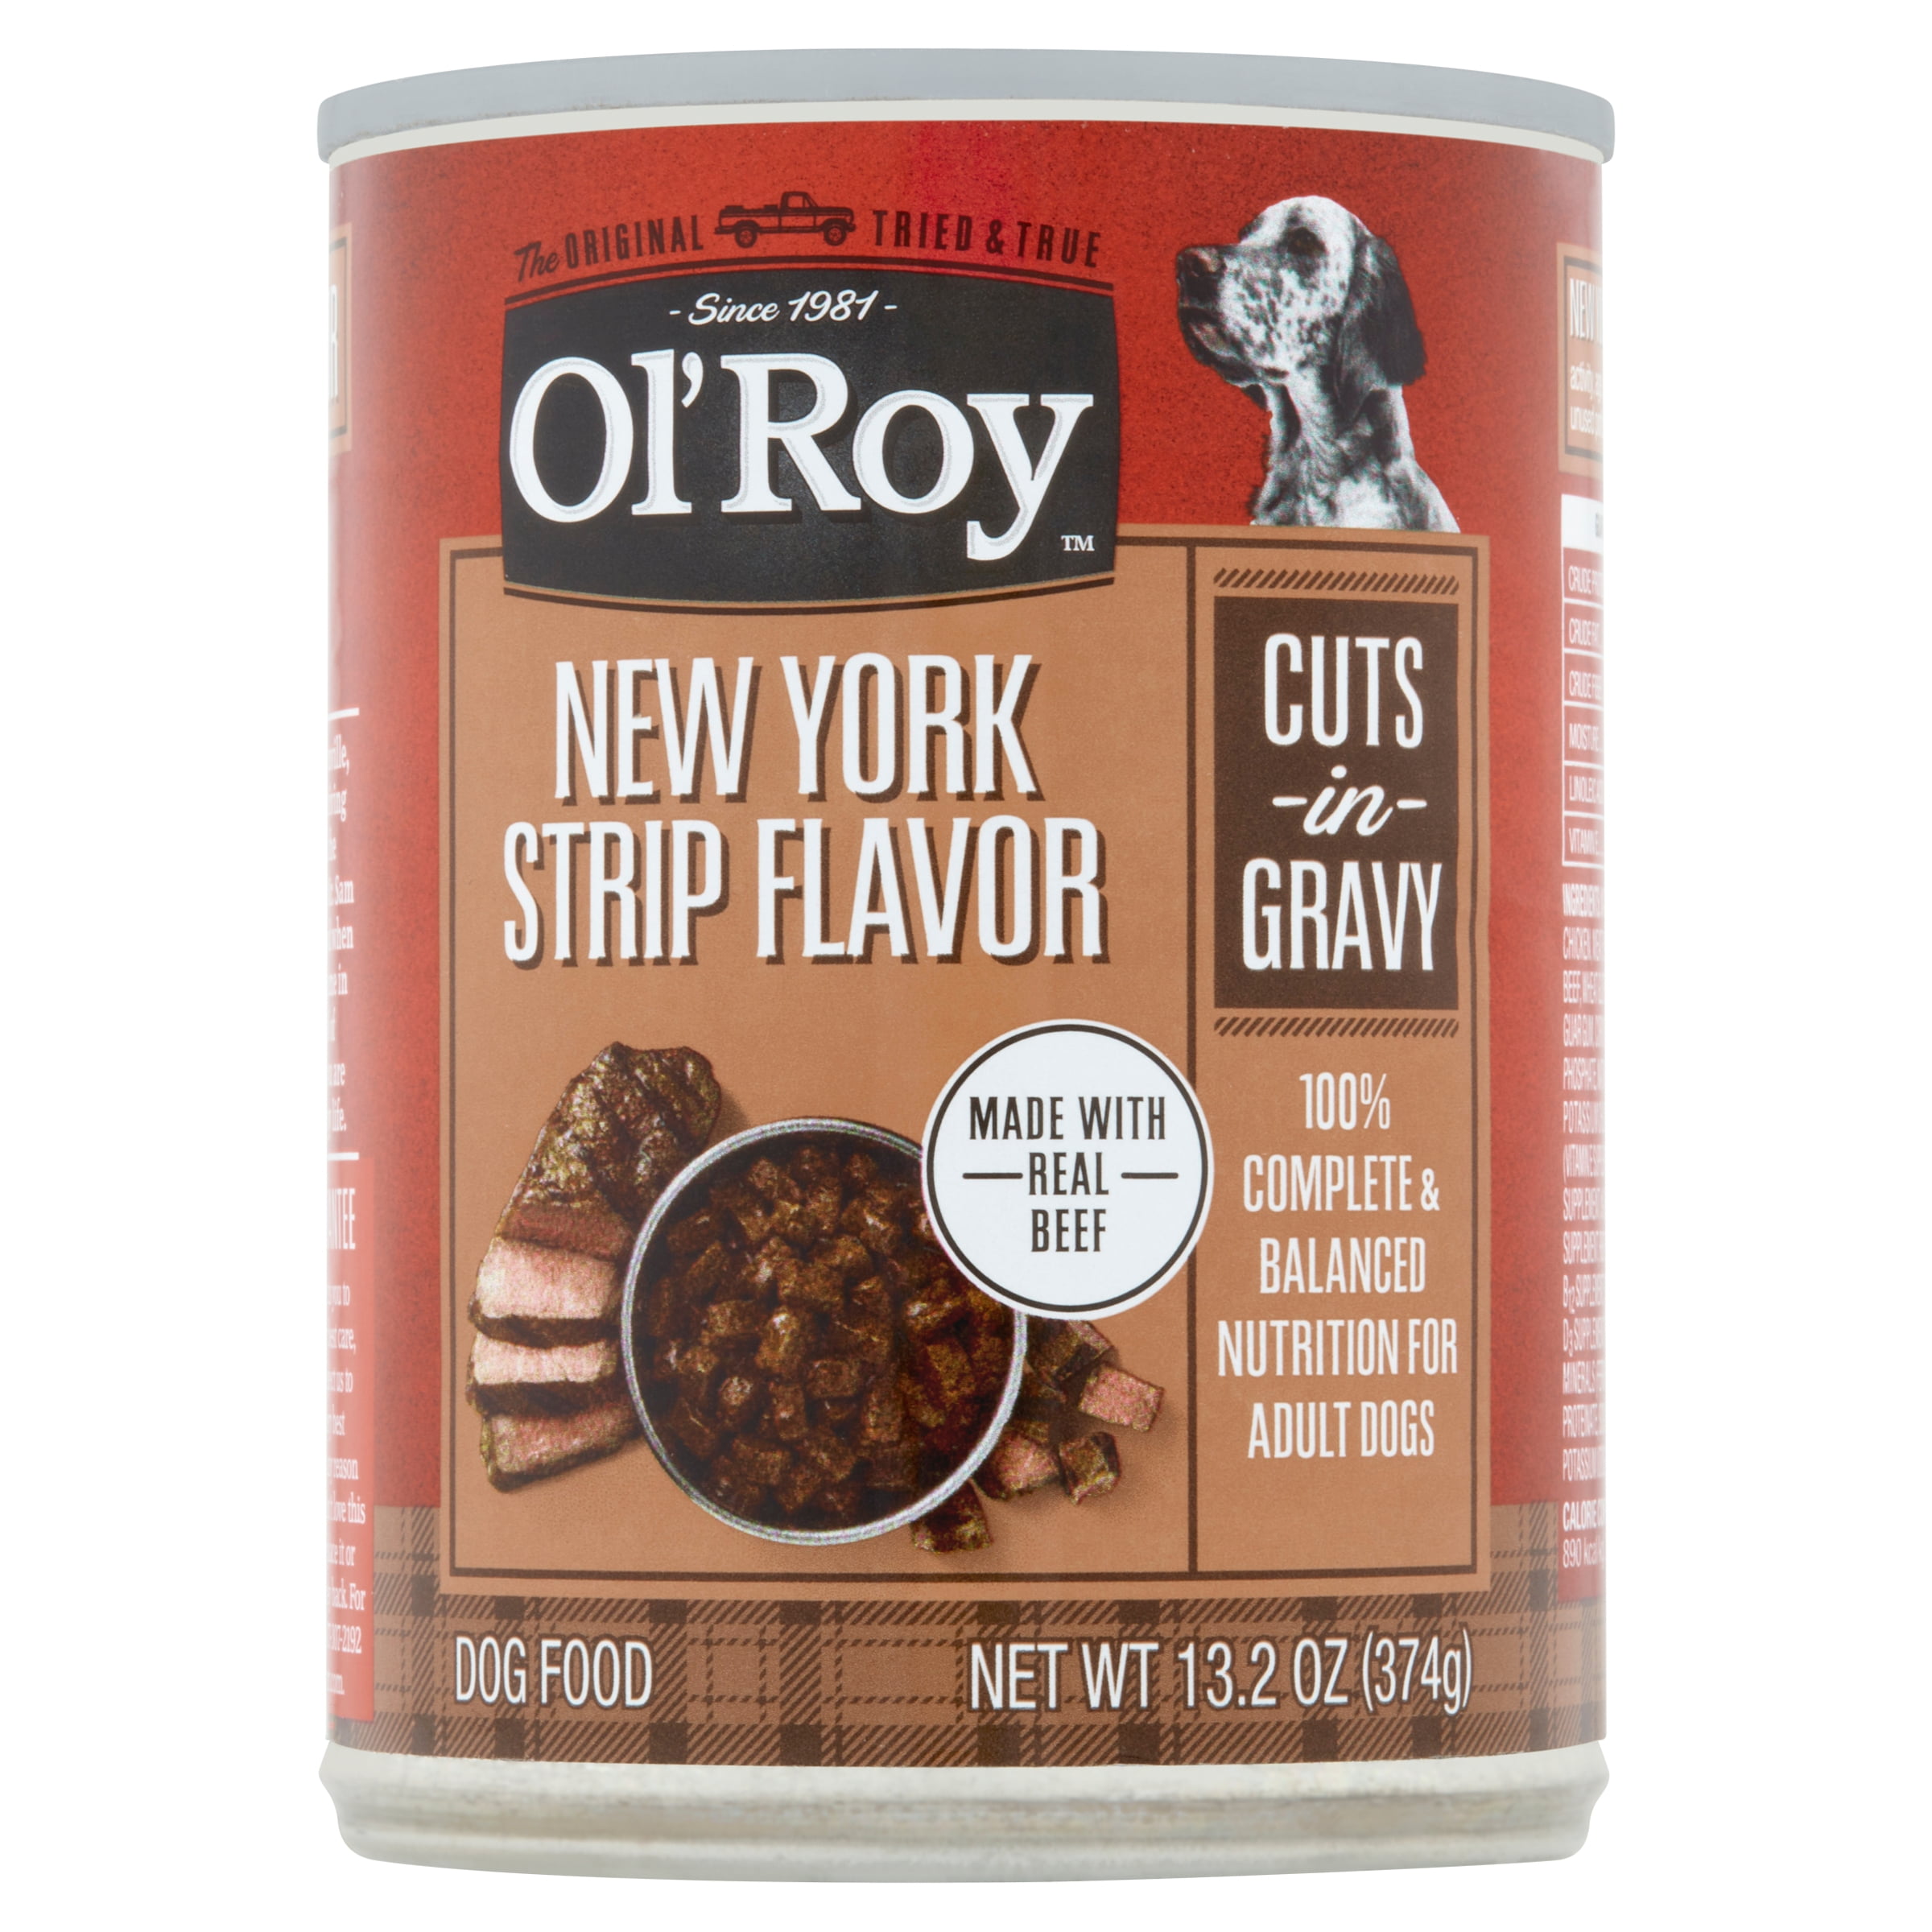 Ol' Roy Cuts in Gravy Wet Dog Food, New York Strip Flavor, 13.2 oz: